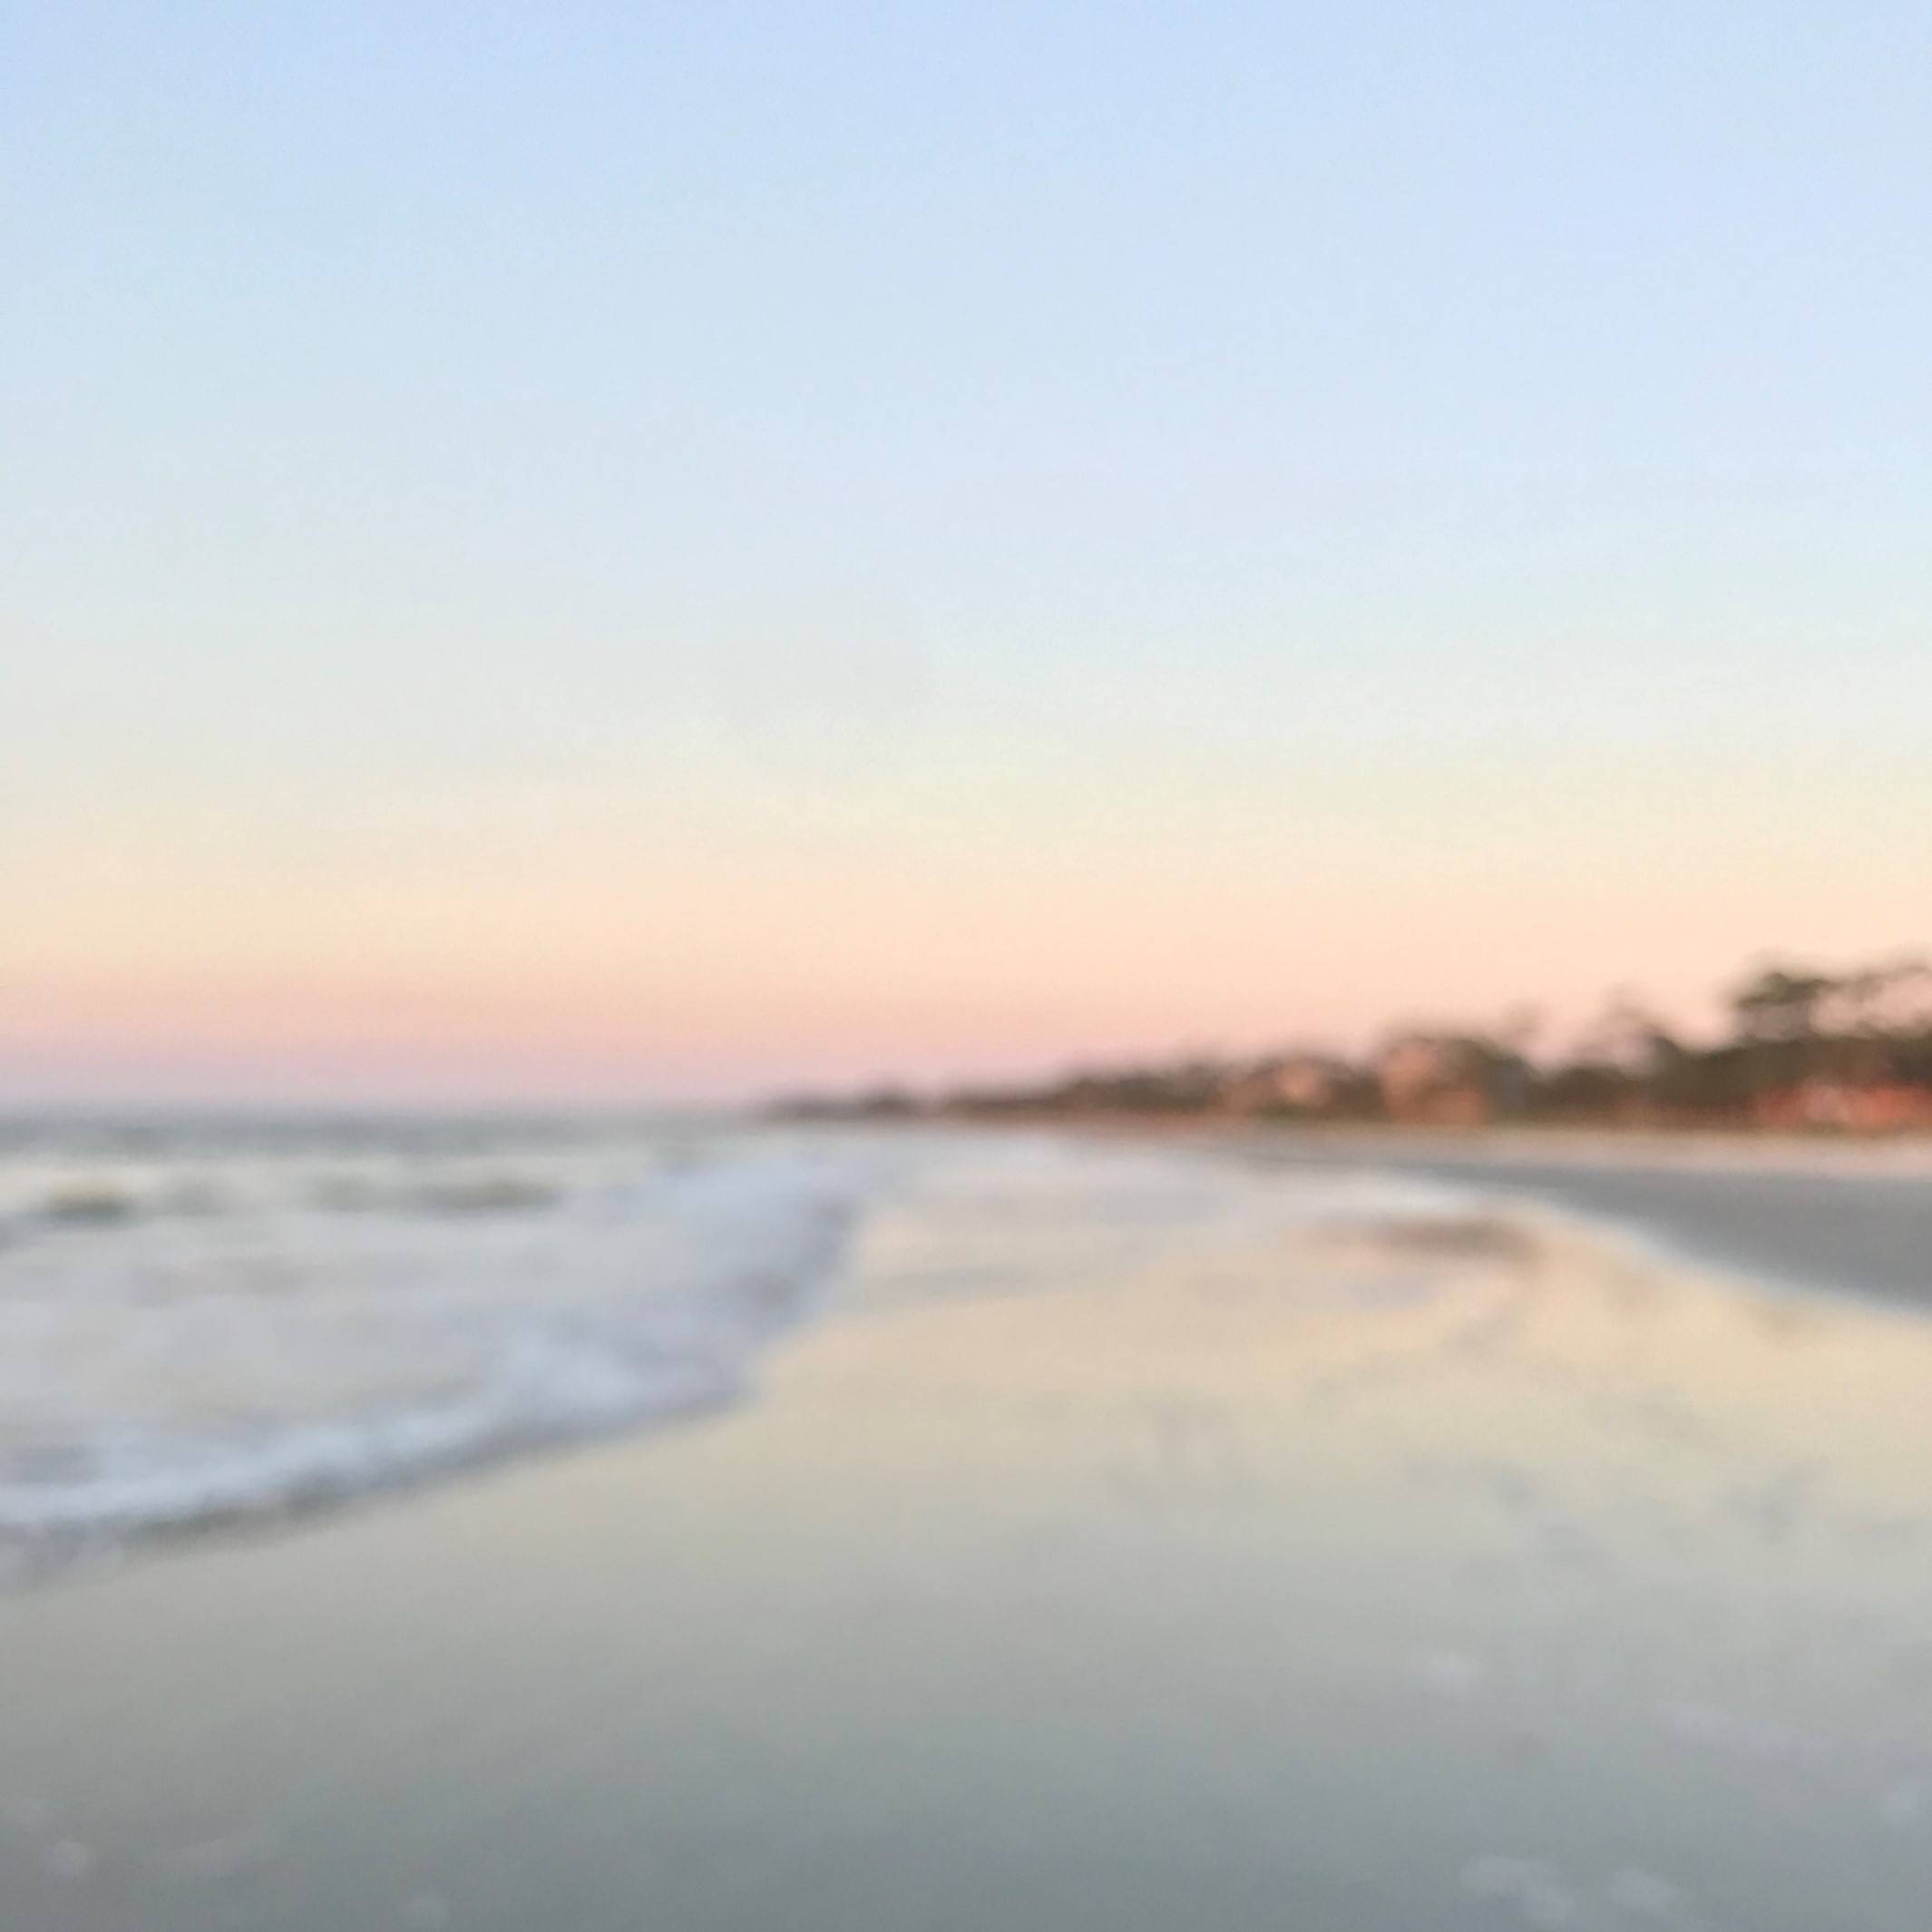 blurry beach image